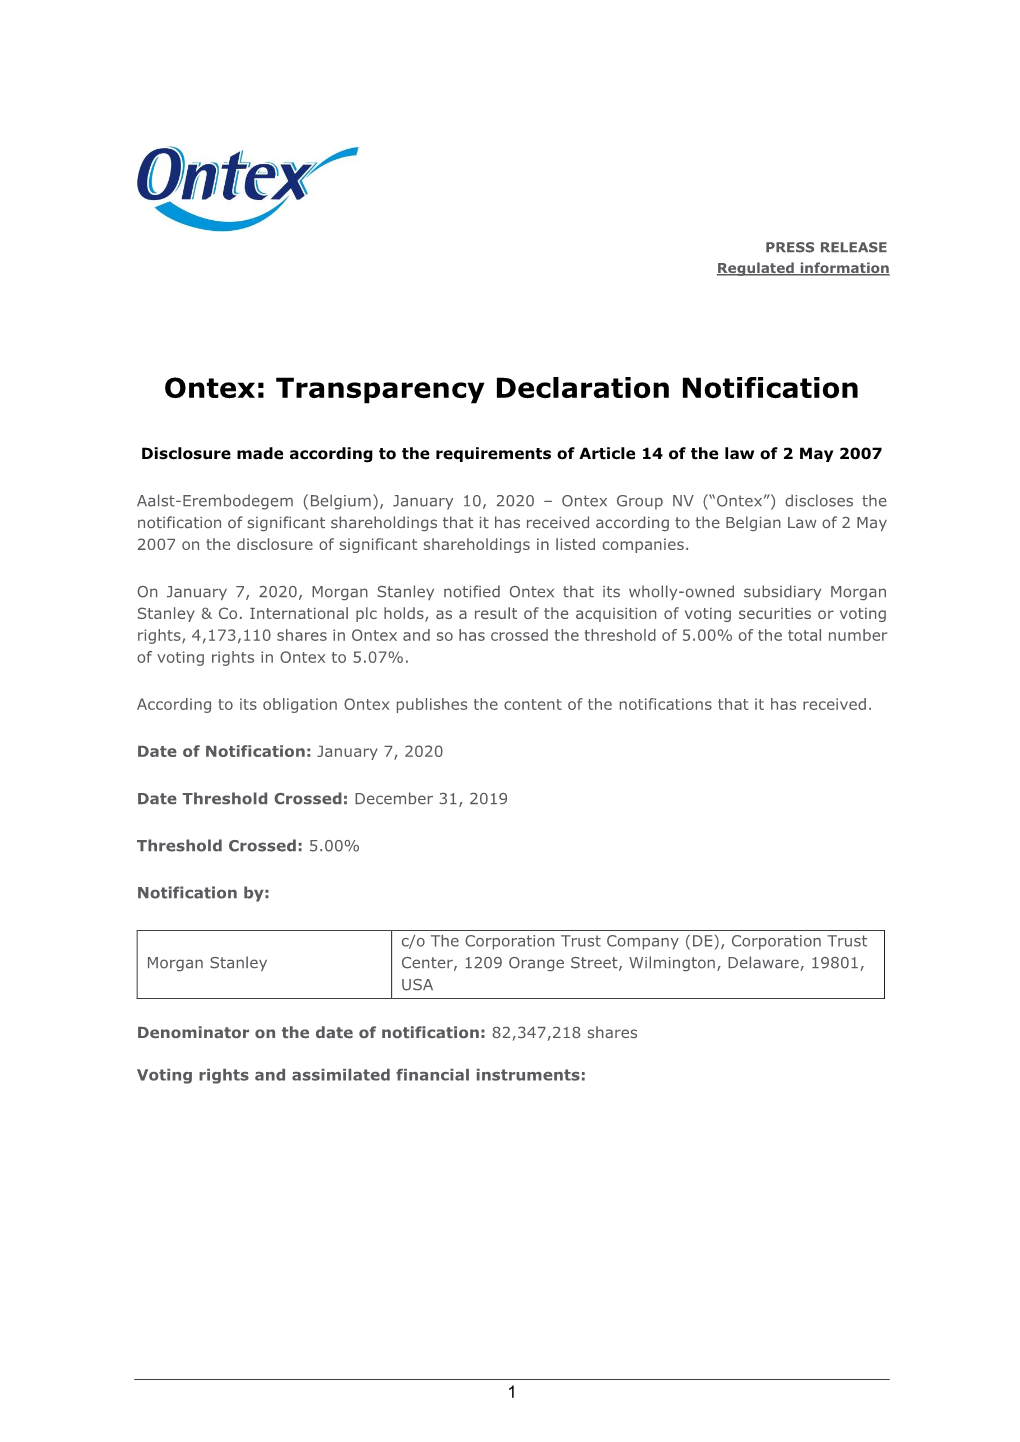 Transparency Declaration Notification